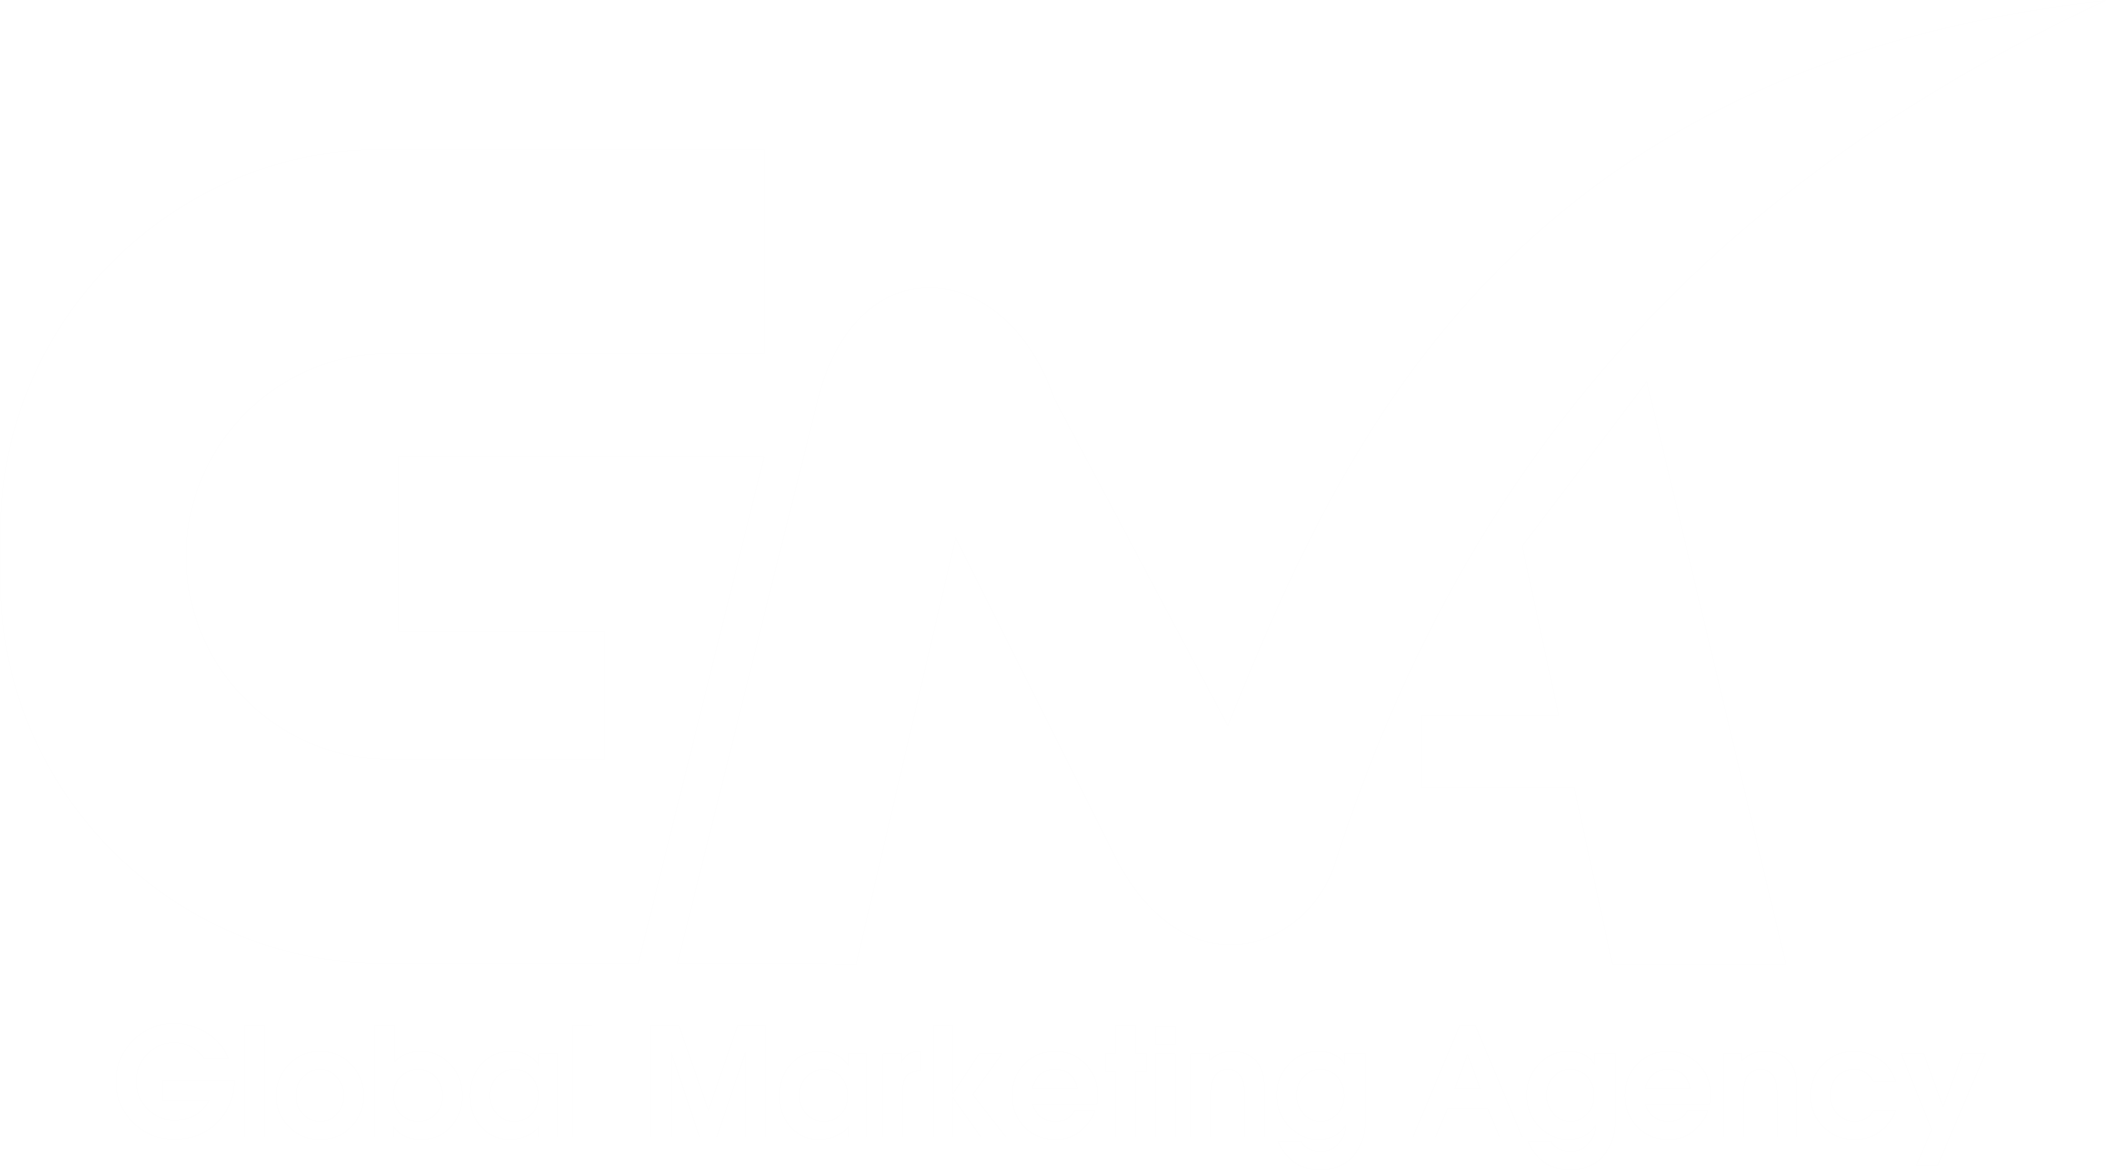 The Global Marketing Agency